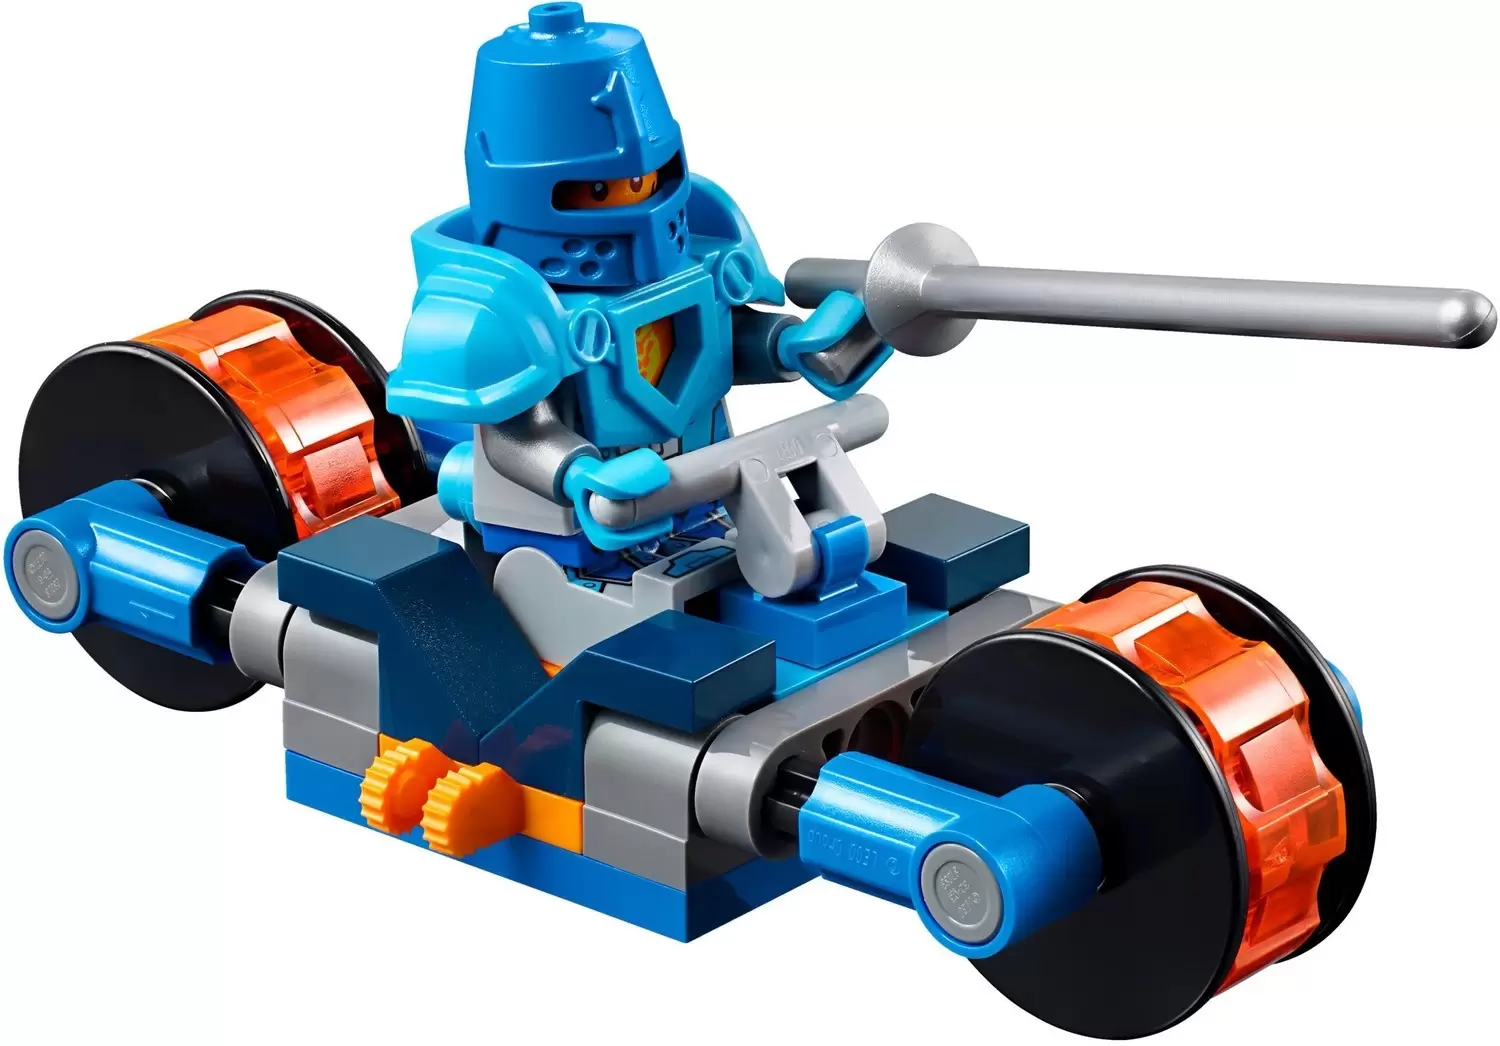 LEGO Nexo Knights - Knighton Rider